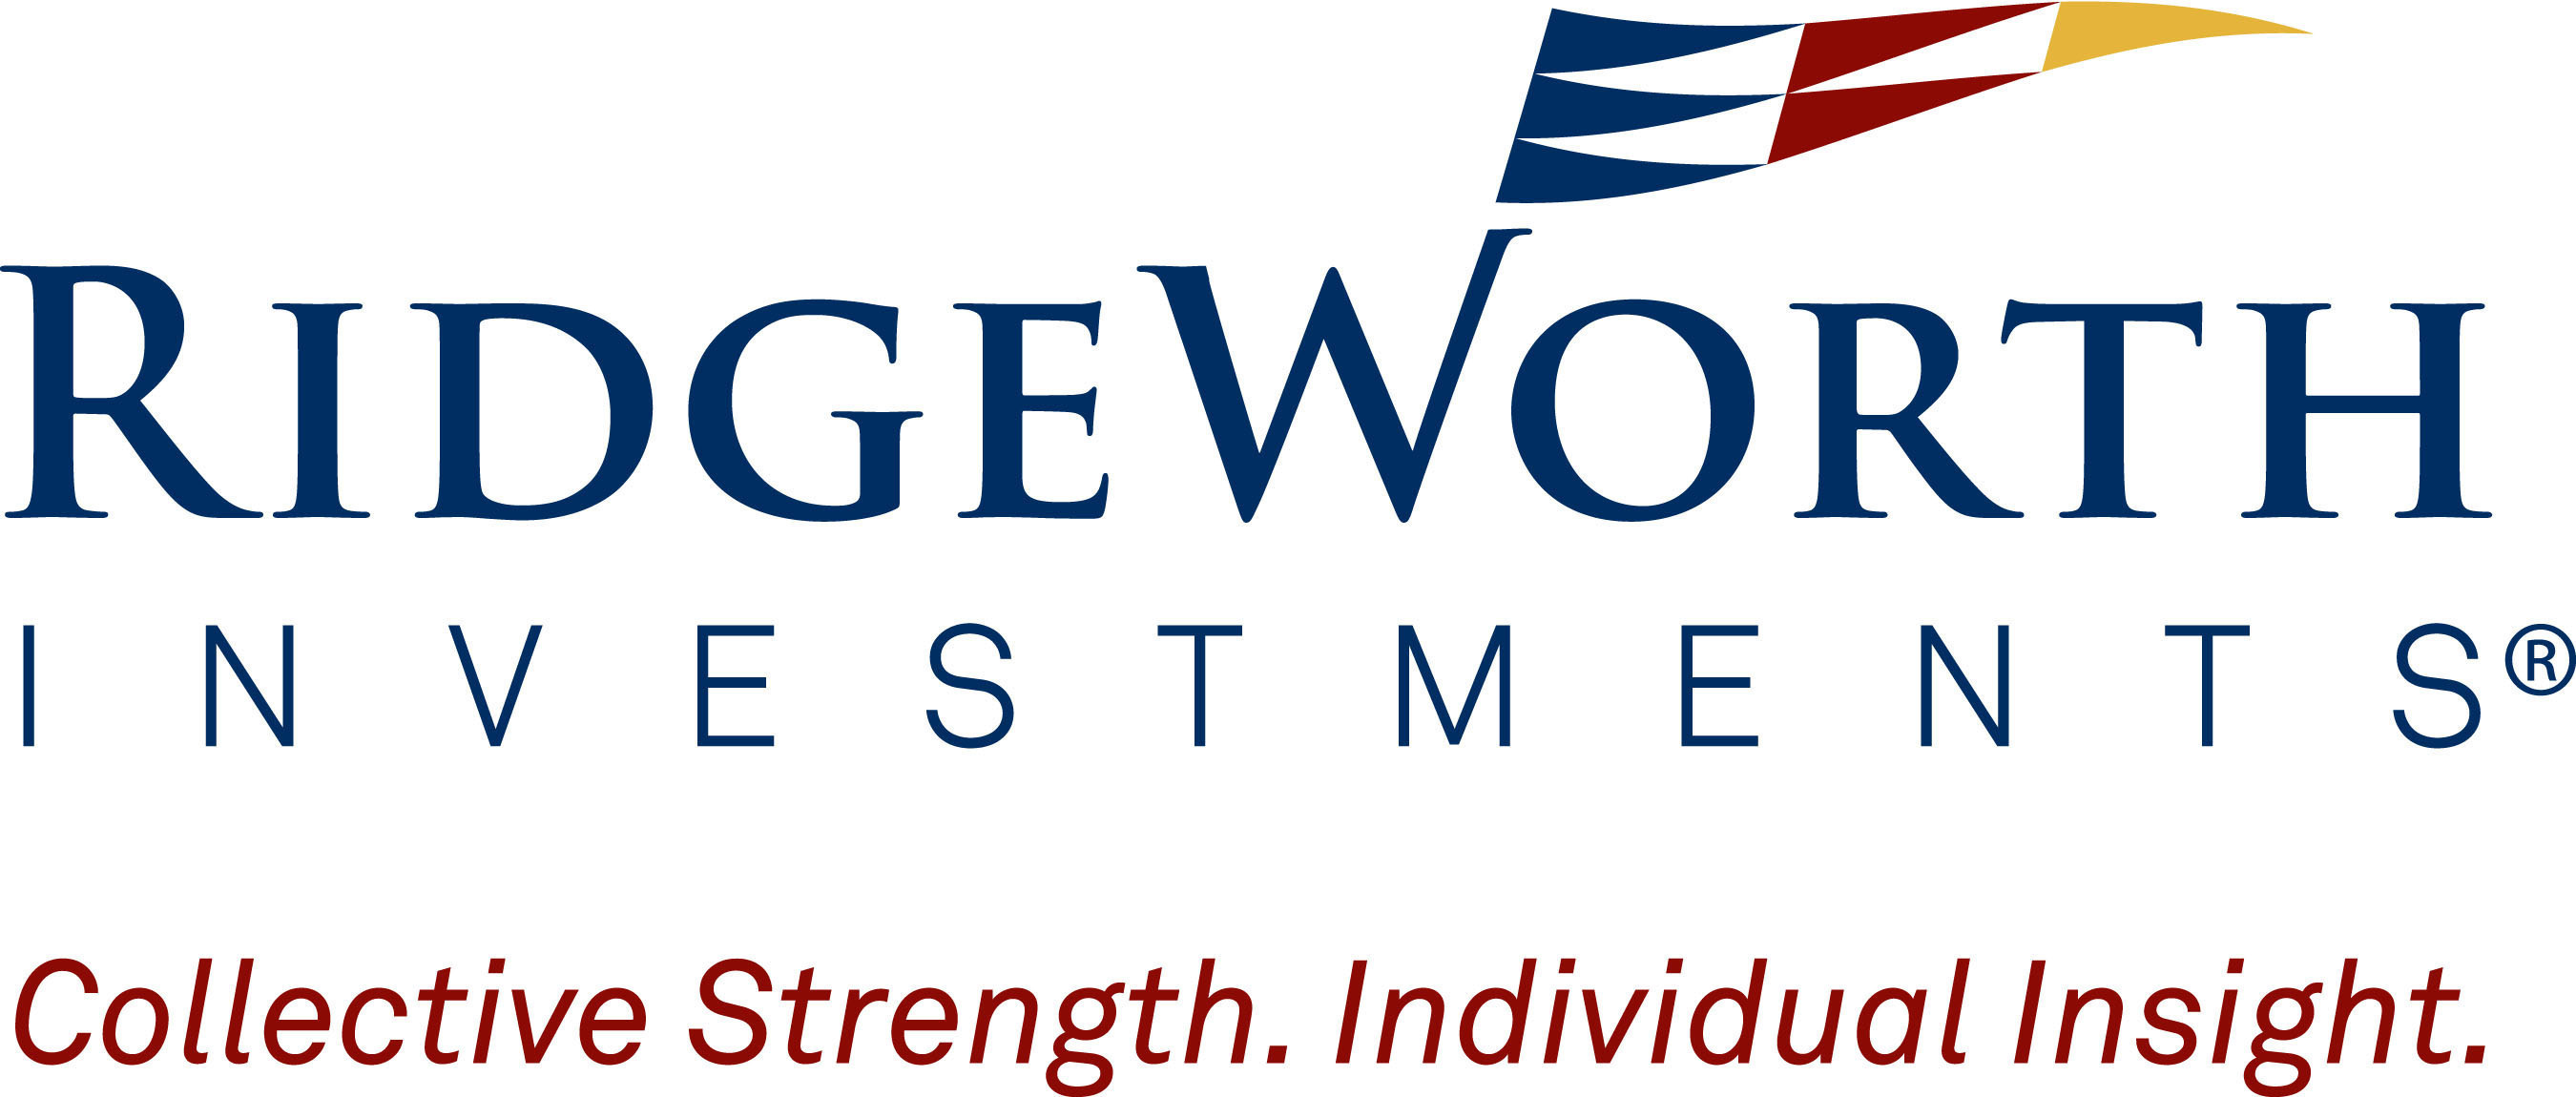 RidgeWorth Investments logo (PRNewsFoto/RidgeWorth Investments) (PRNewsFoto/RidgeWorth Investments)